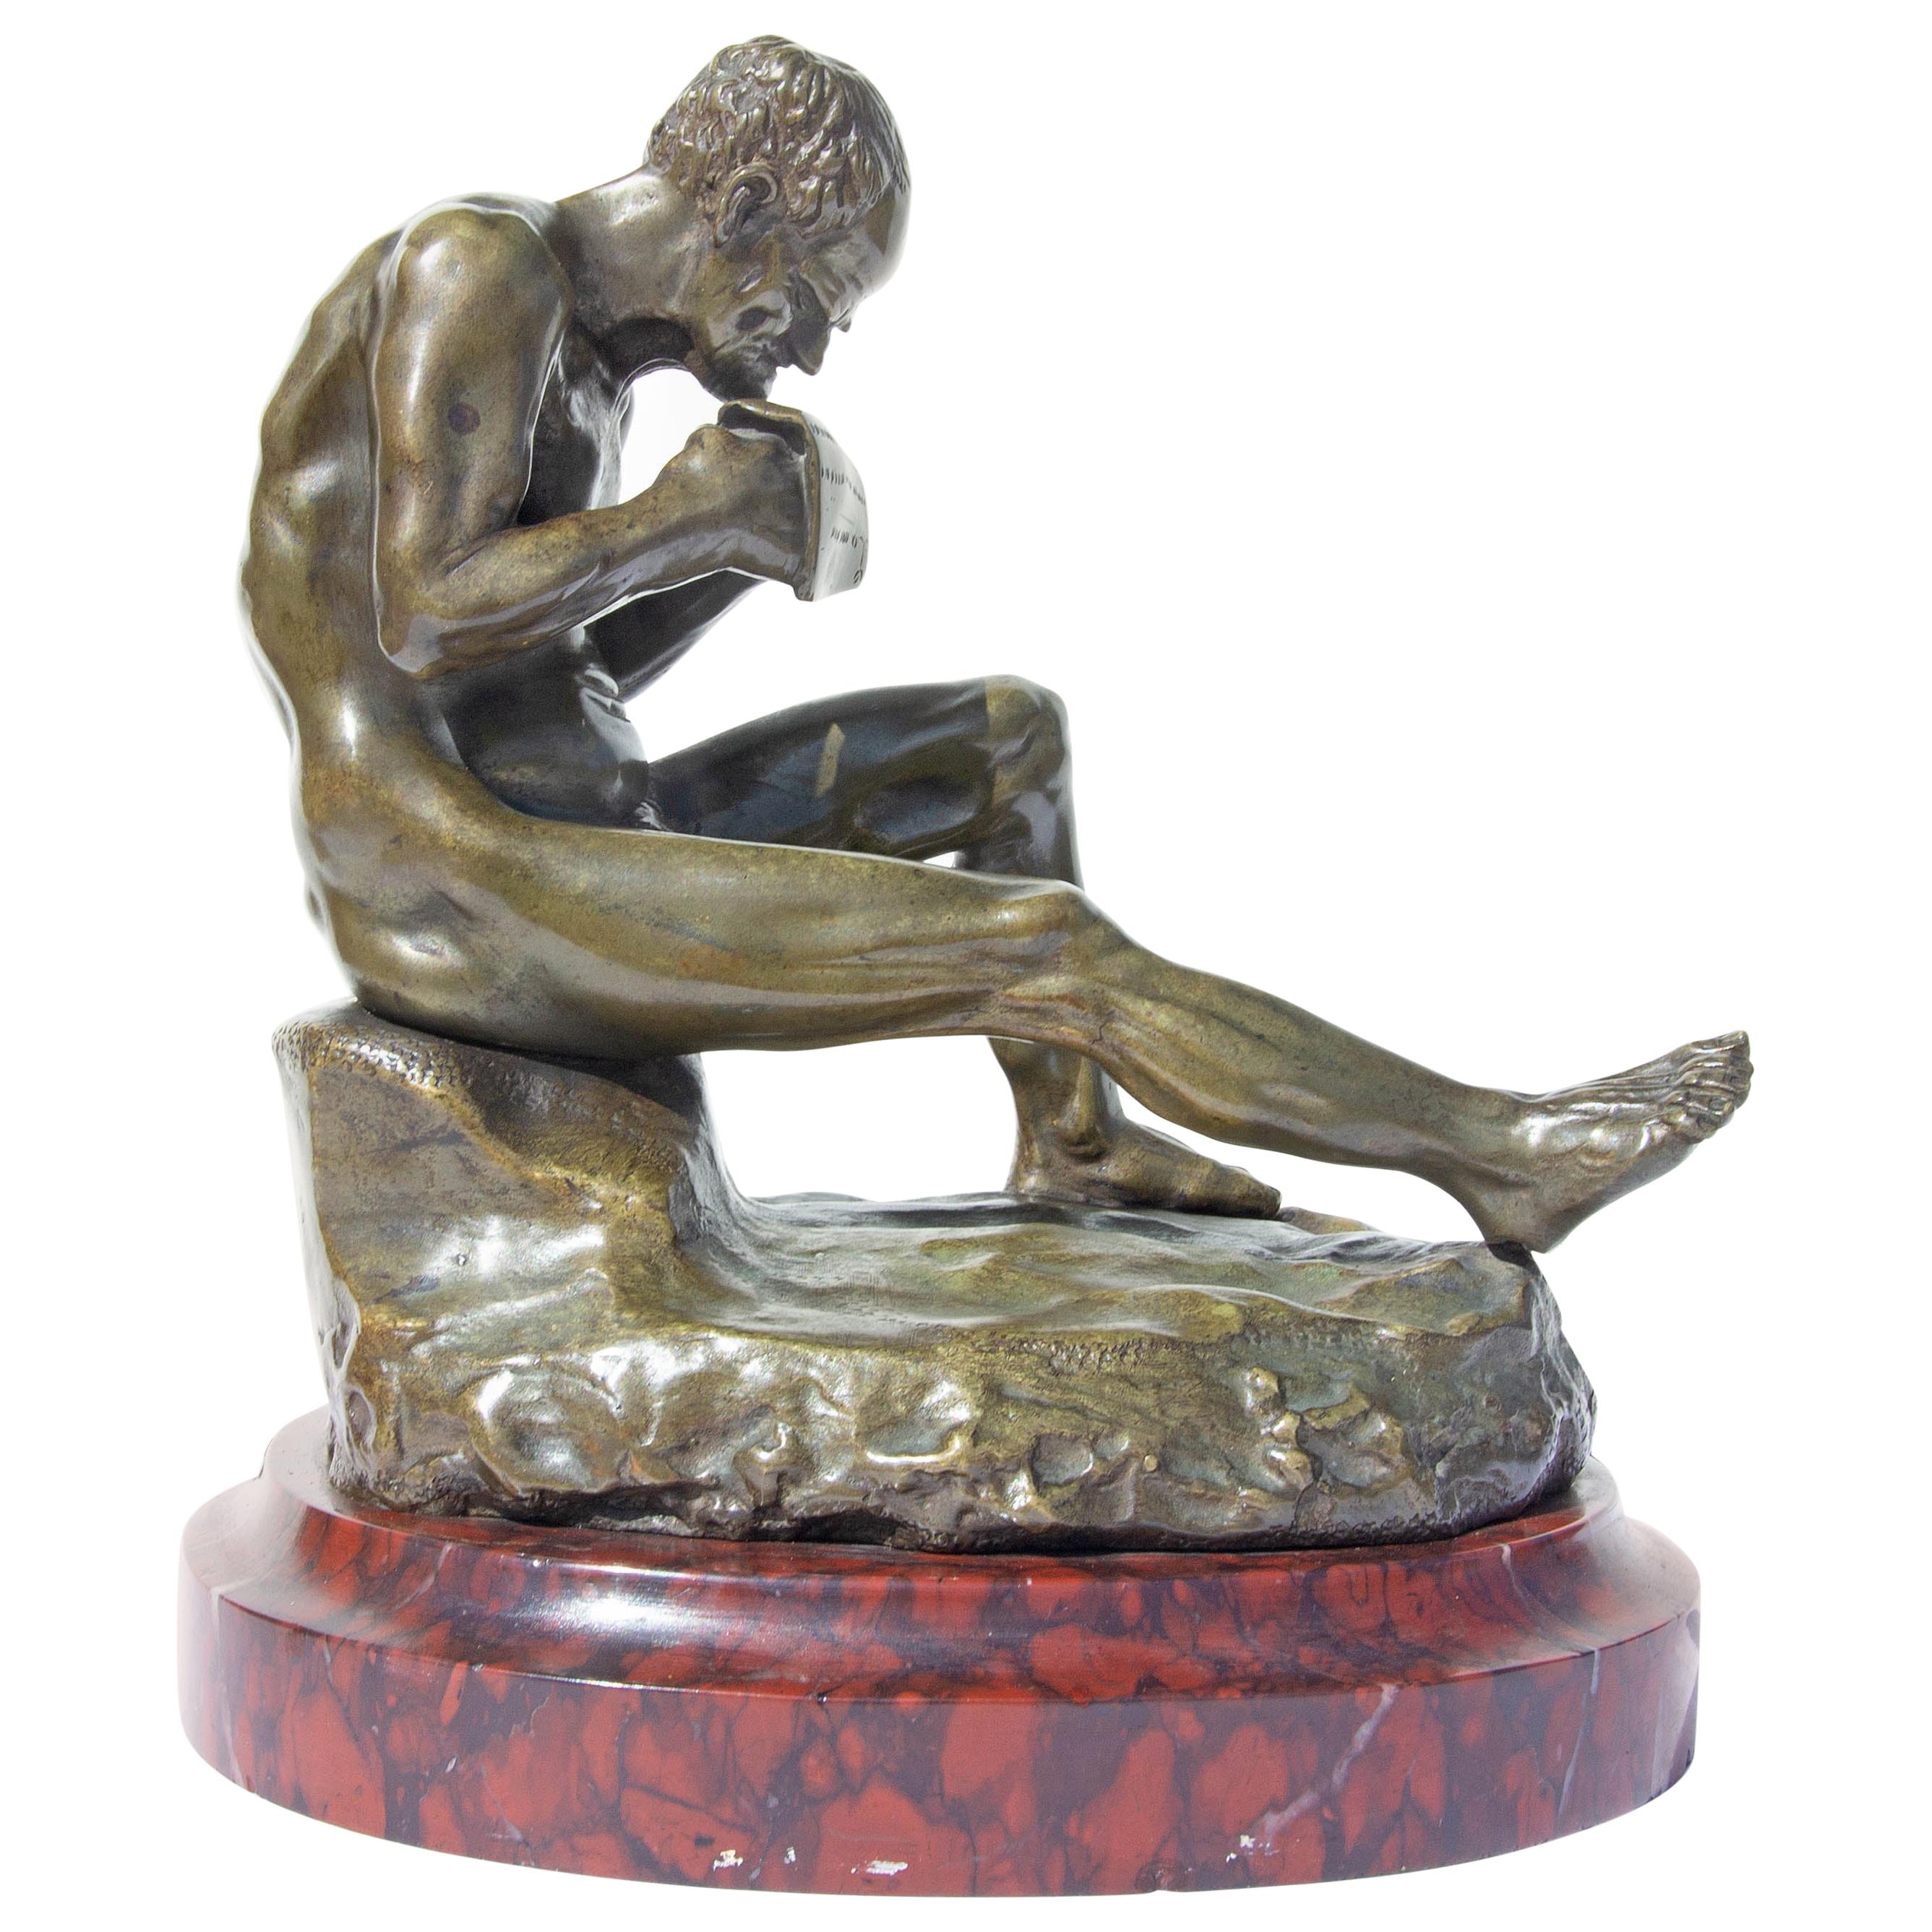 19th Century Bronze Sculpture "The Letter"